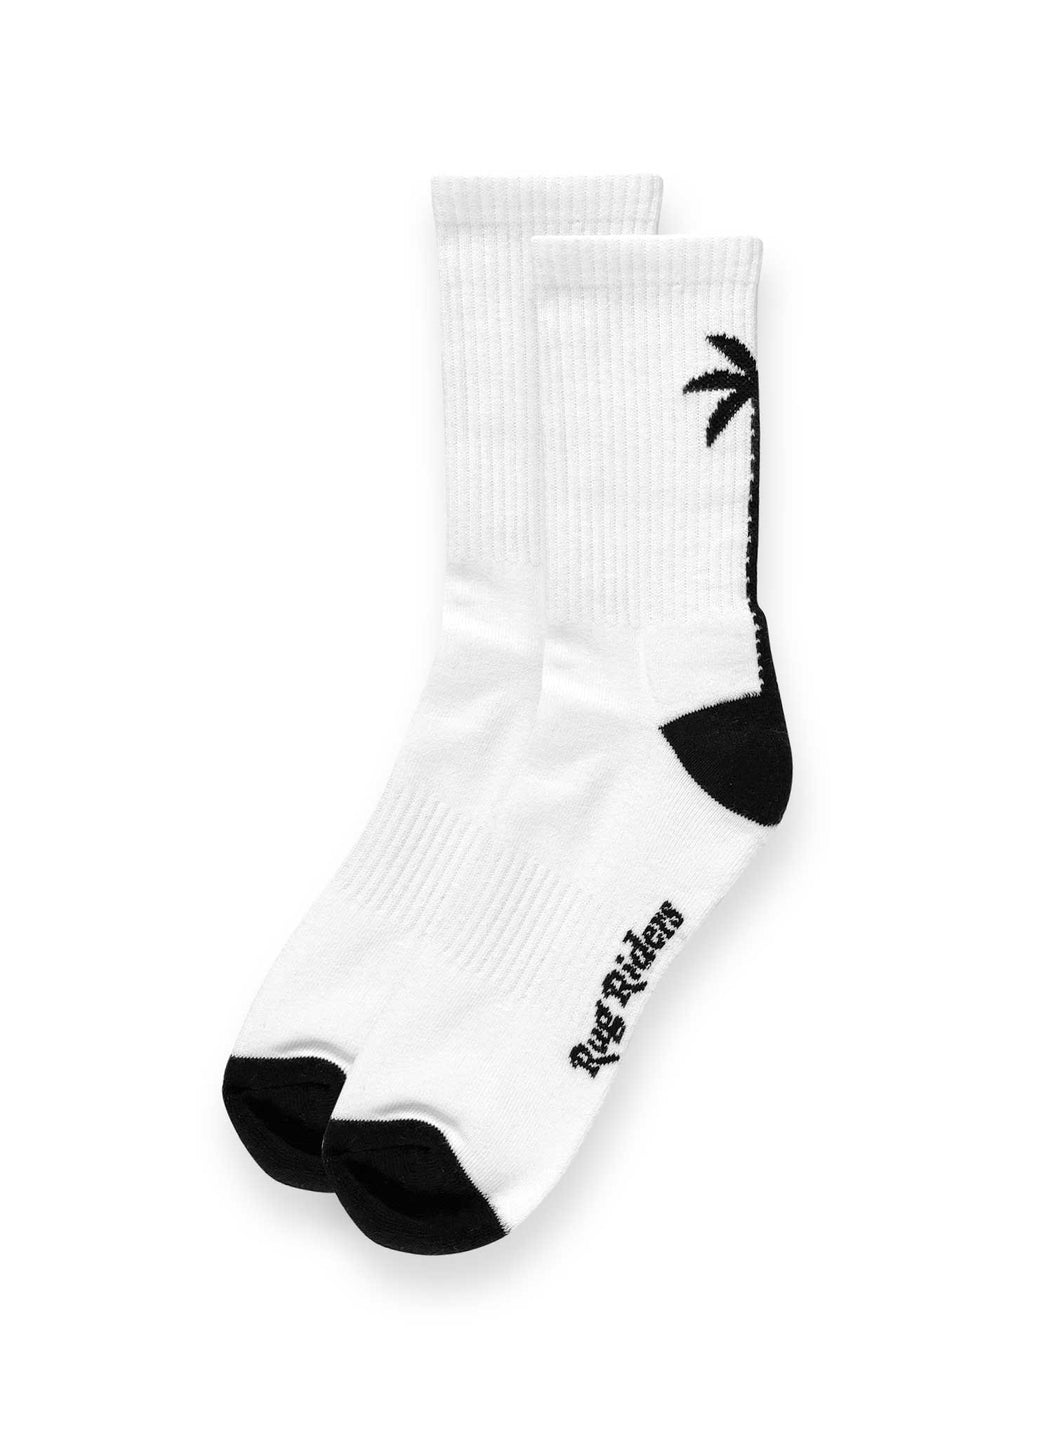 RugRiders Palm Tree Socks – White